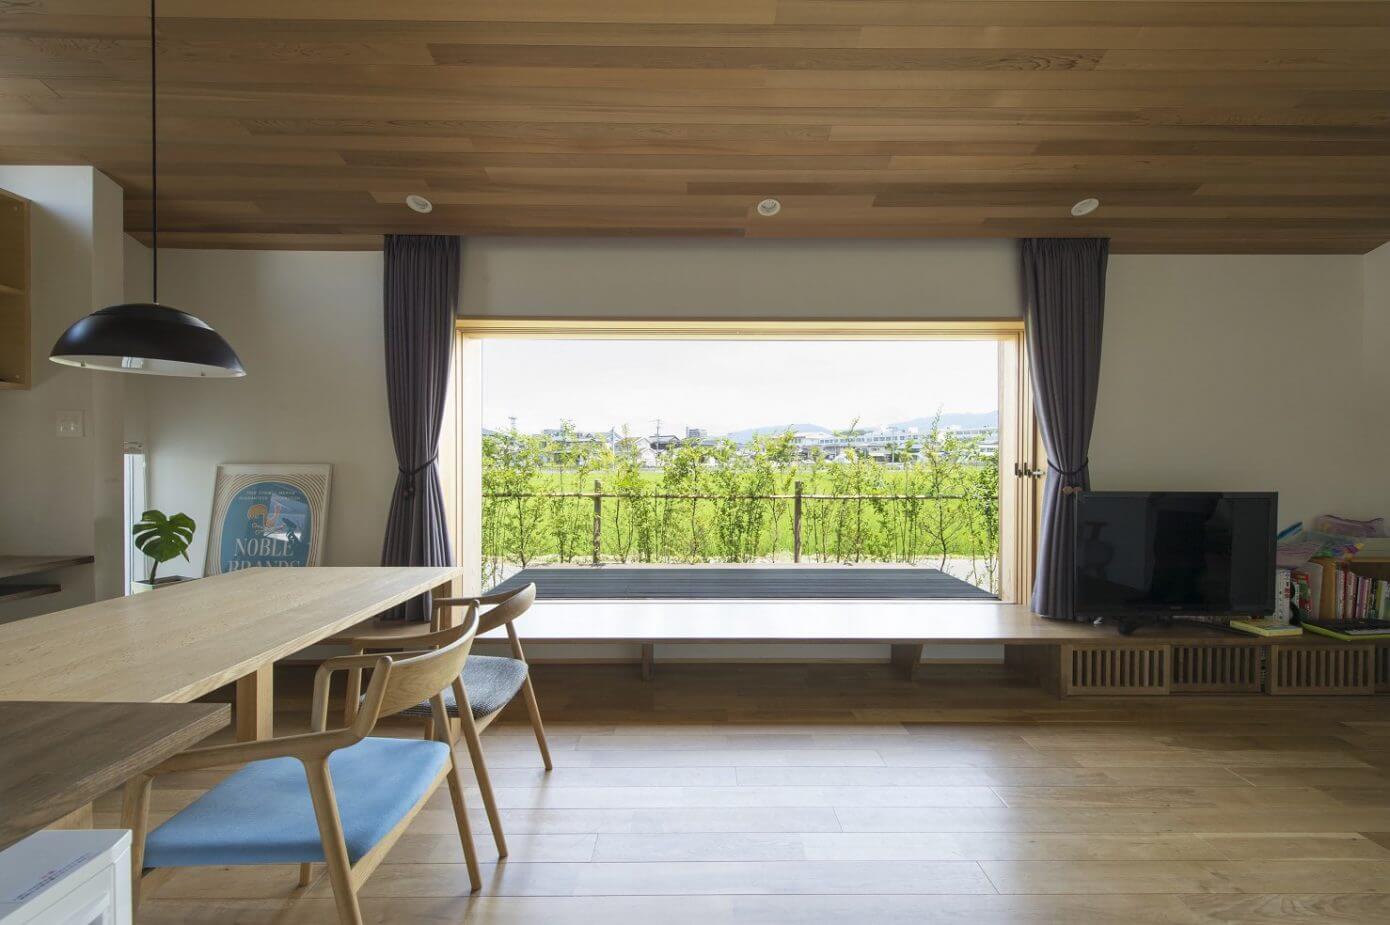 House in Itoshima by Teto Architects